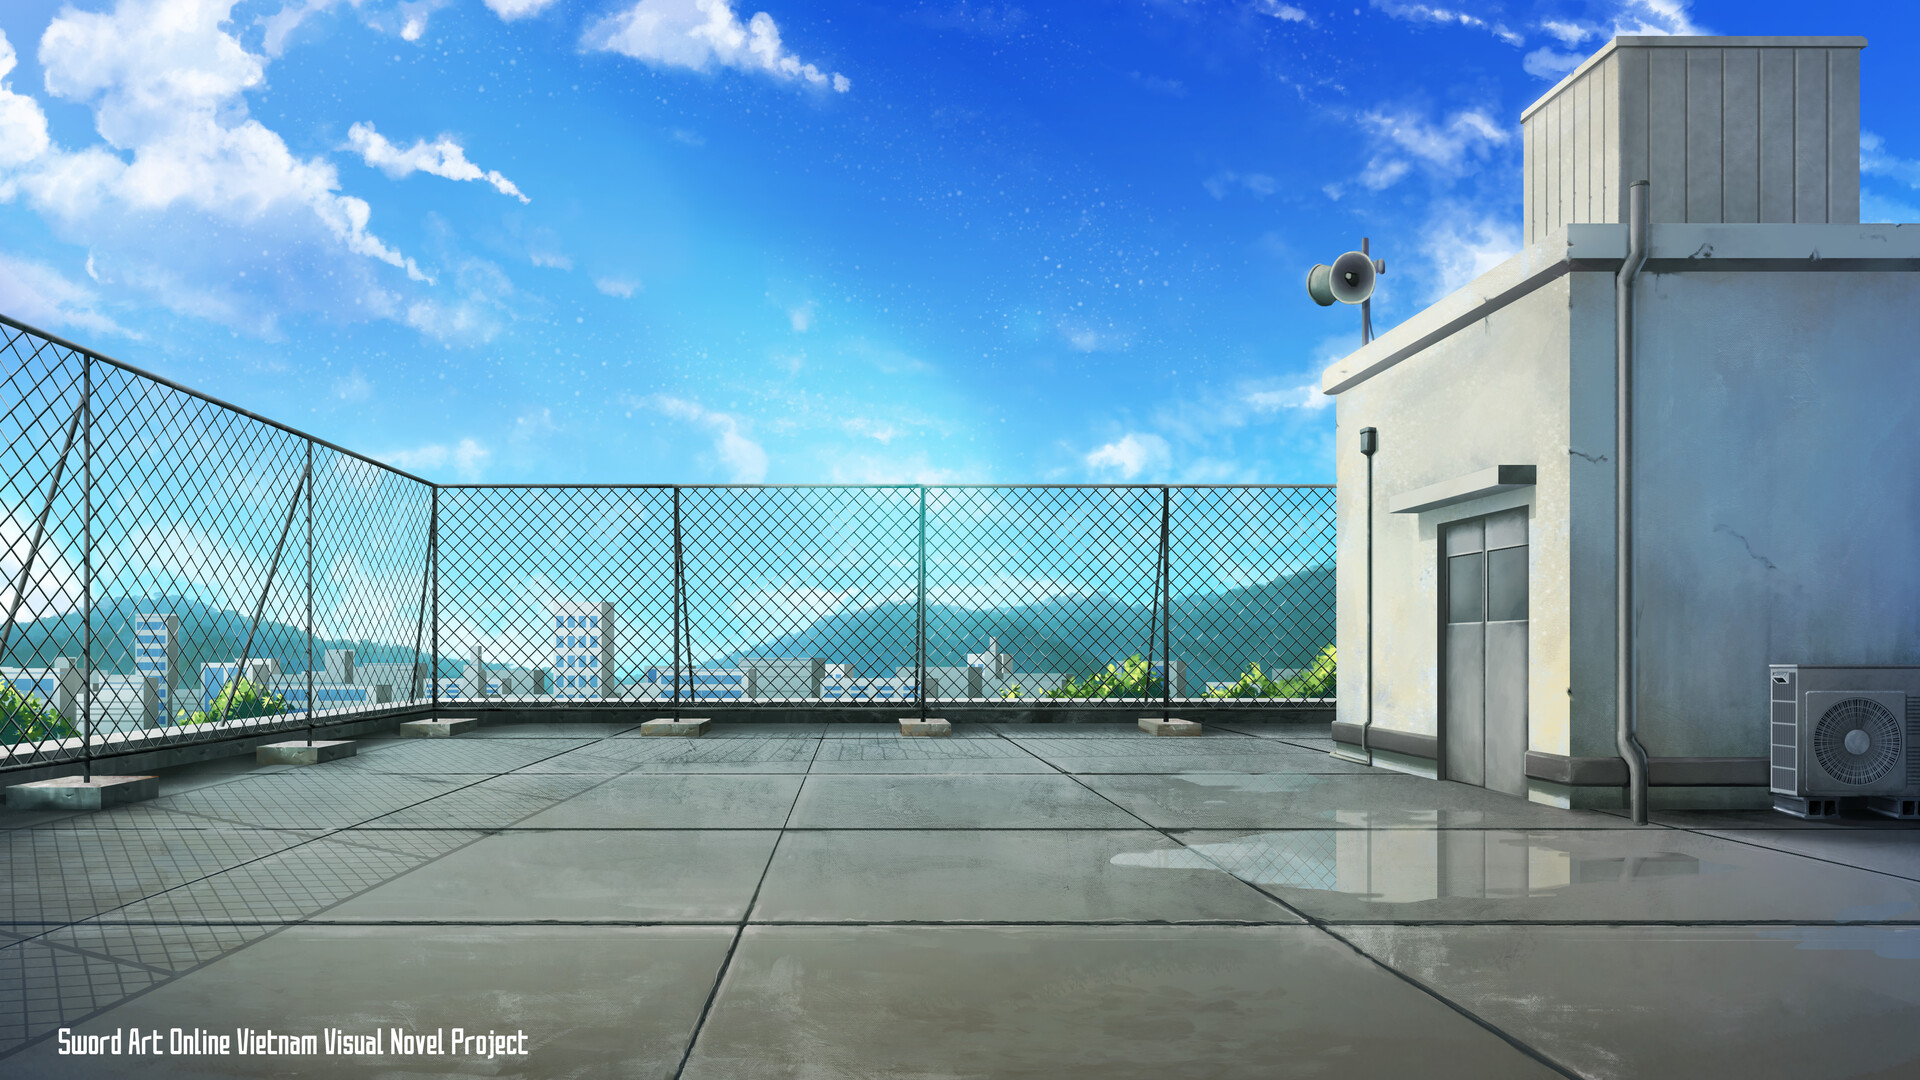 School BG anime for SAO Vietnam Fandom about visual novel project